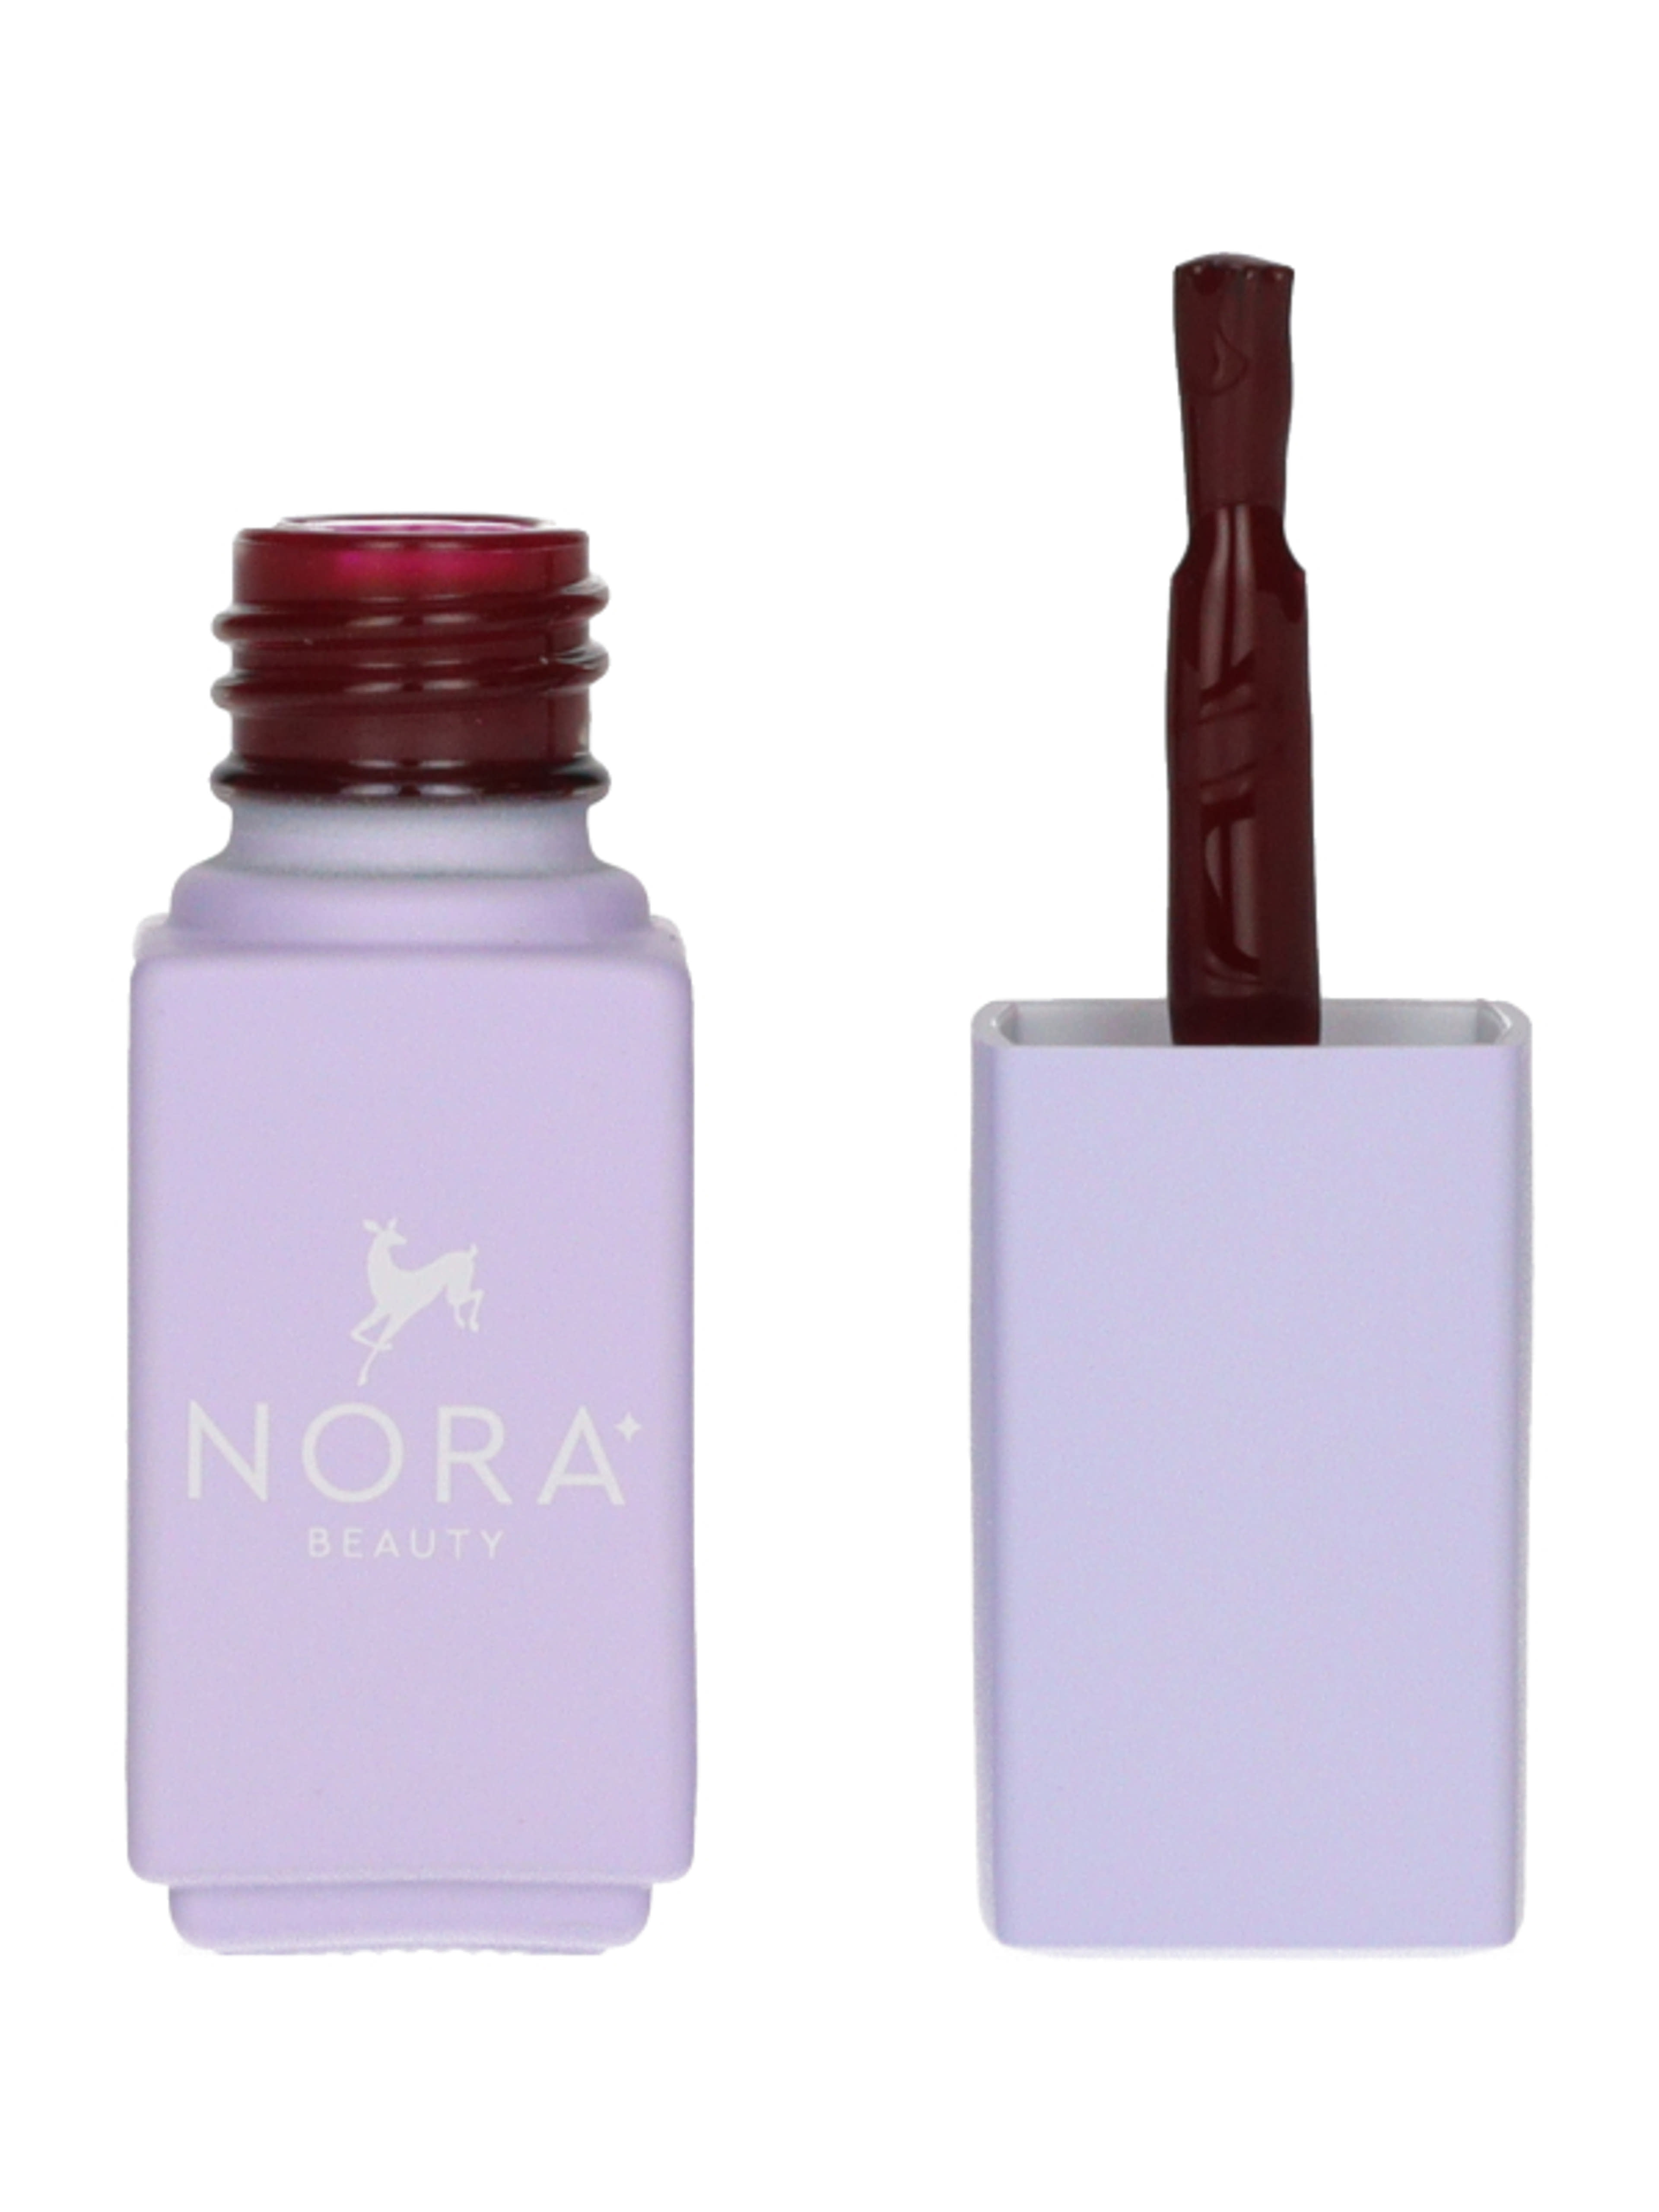 Nora Beauty UV lakkzselé /cn-02 Royal burgundy - 1 db-4